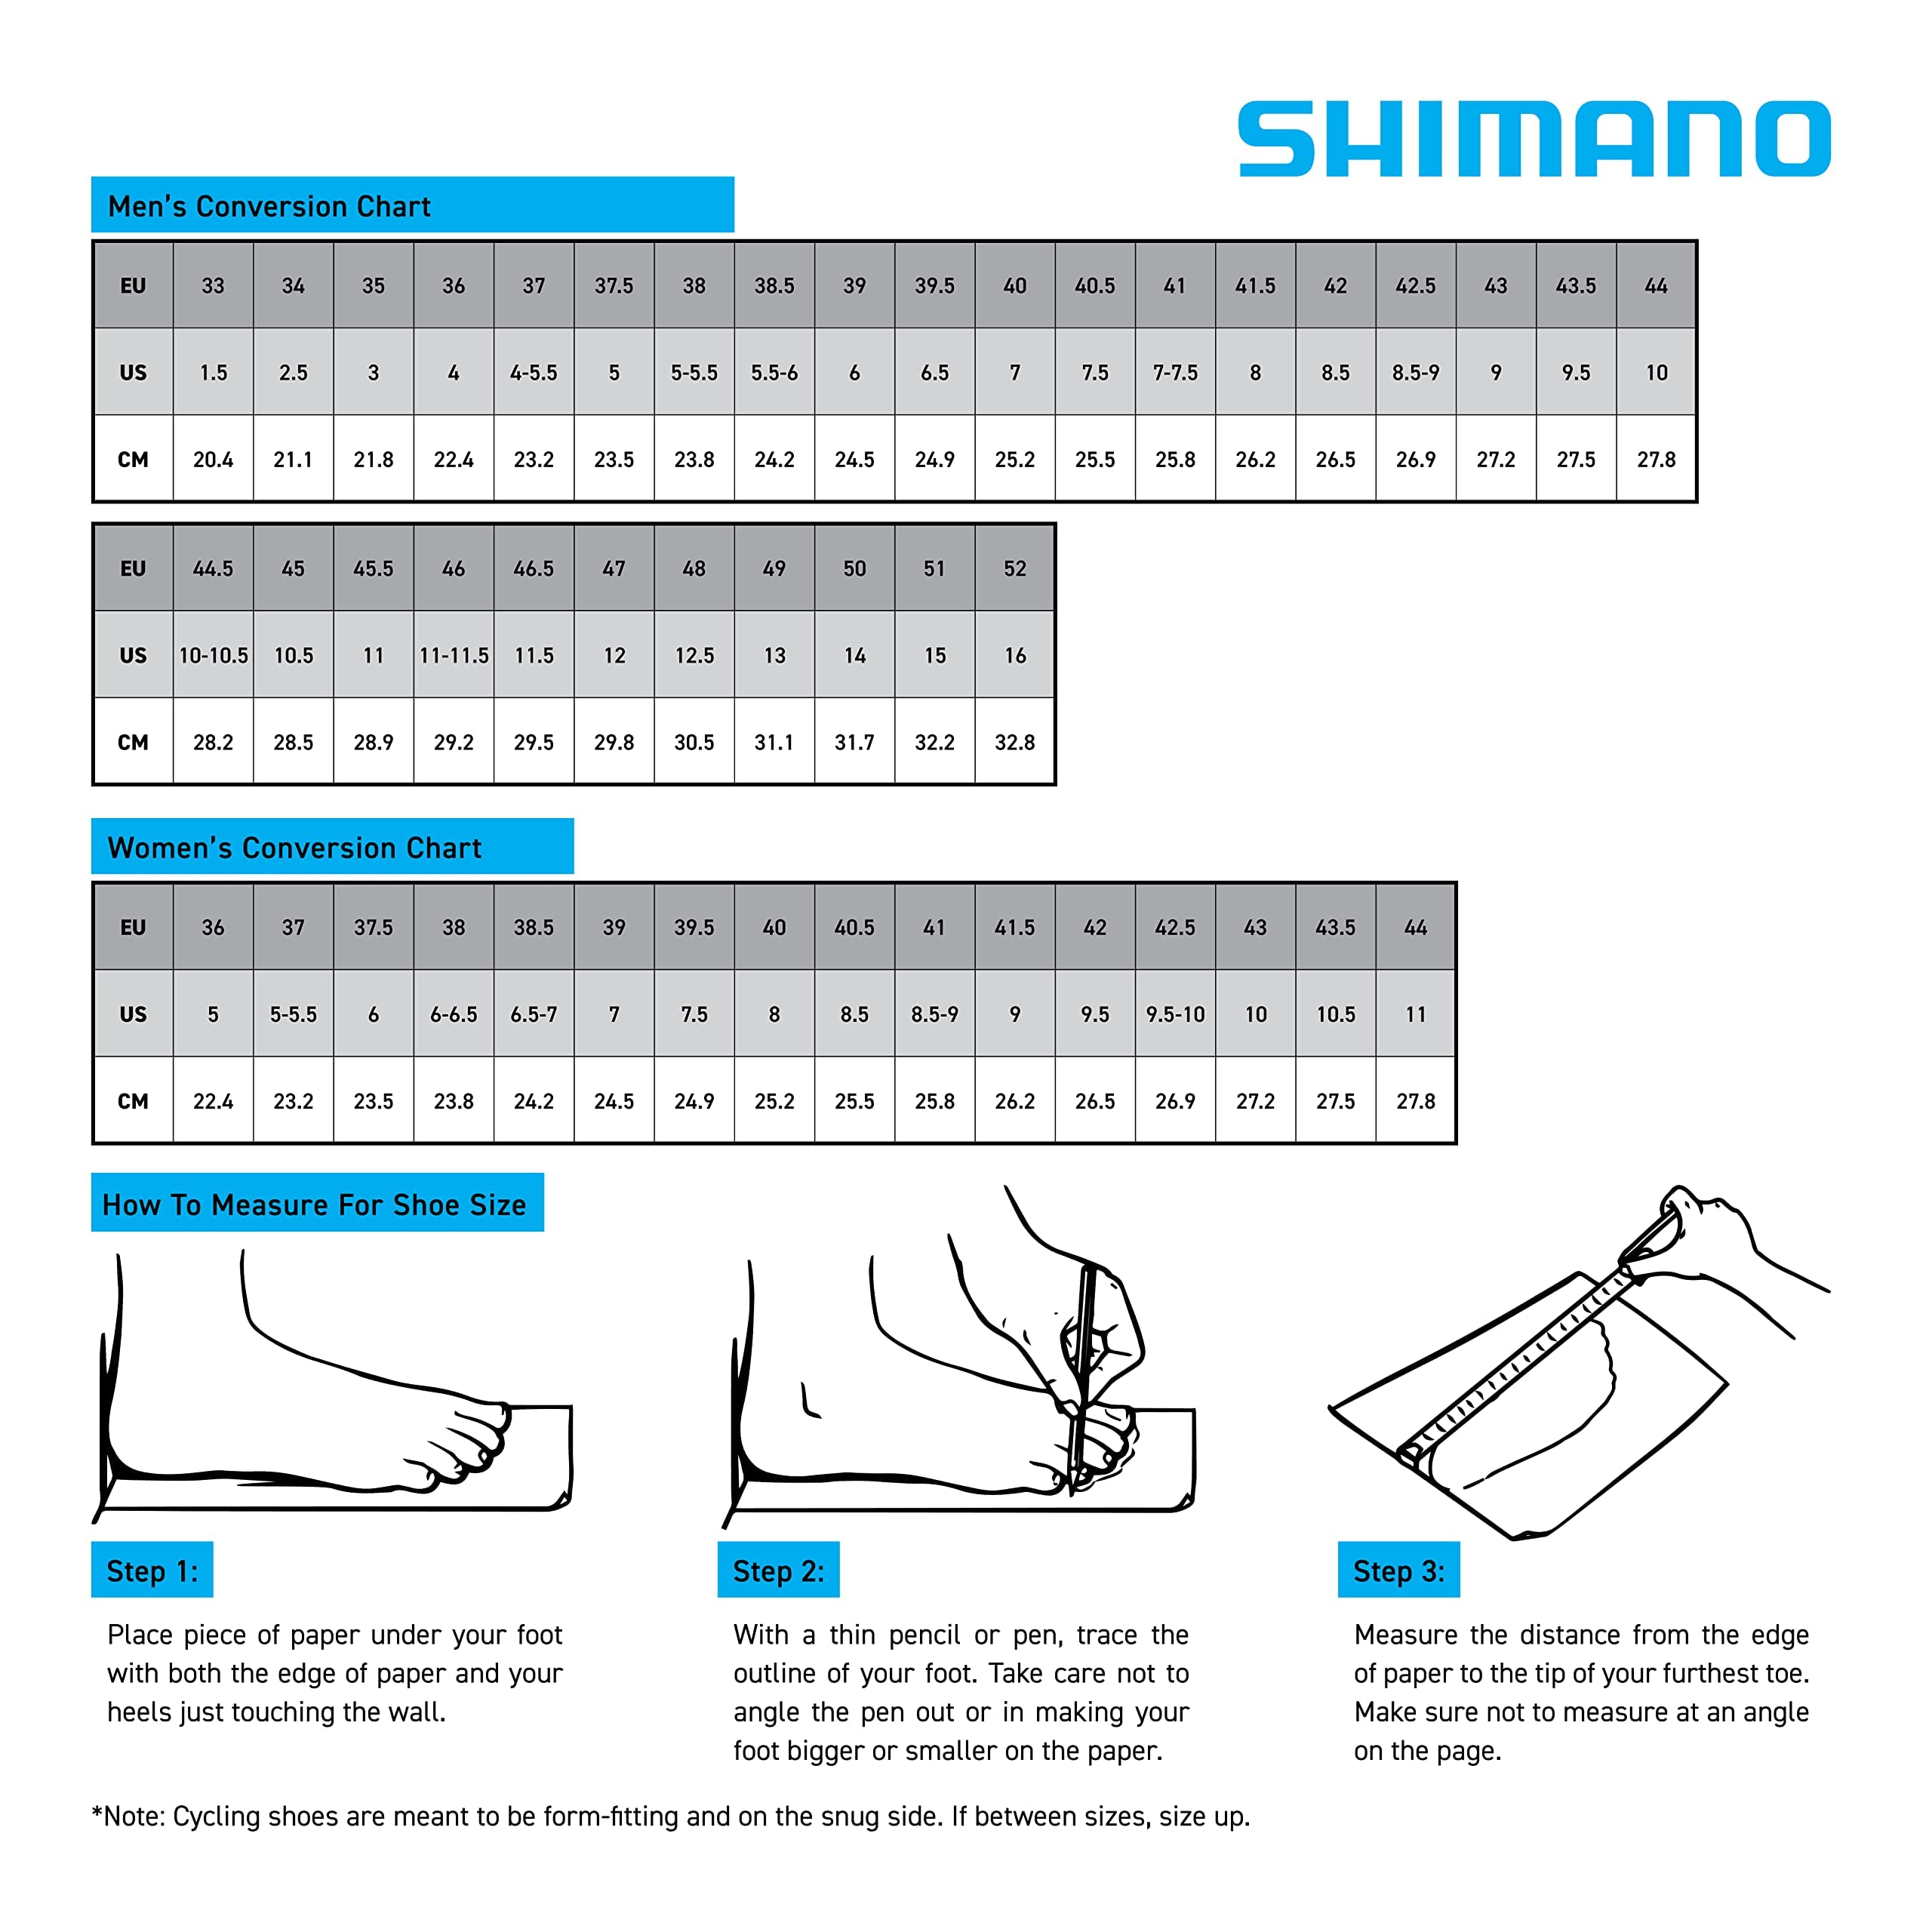 SHIMANO SH-RC100W Feature-Packed Entry Level Road Shoe, Navy, 7.5-8 Women (EU 41)